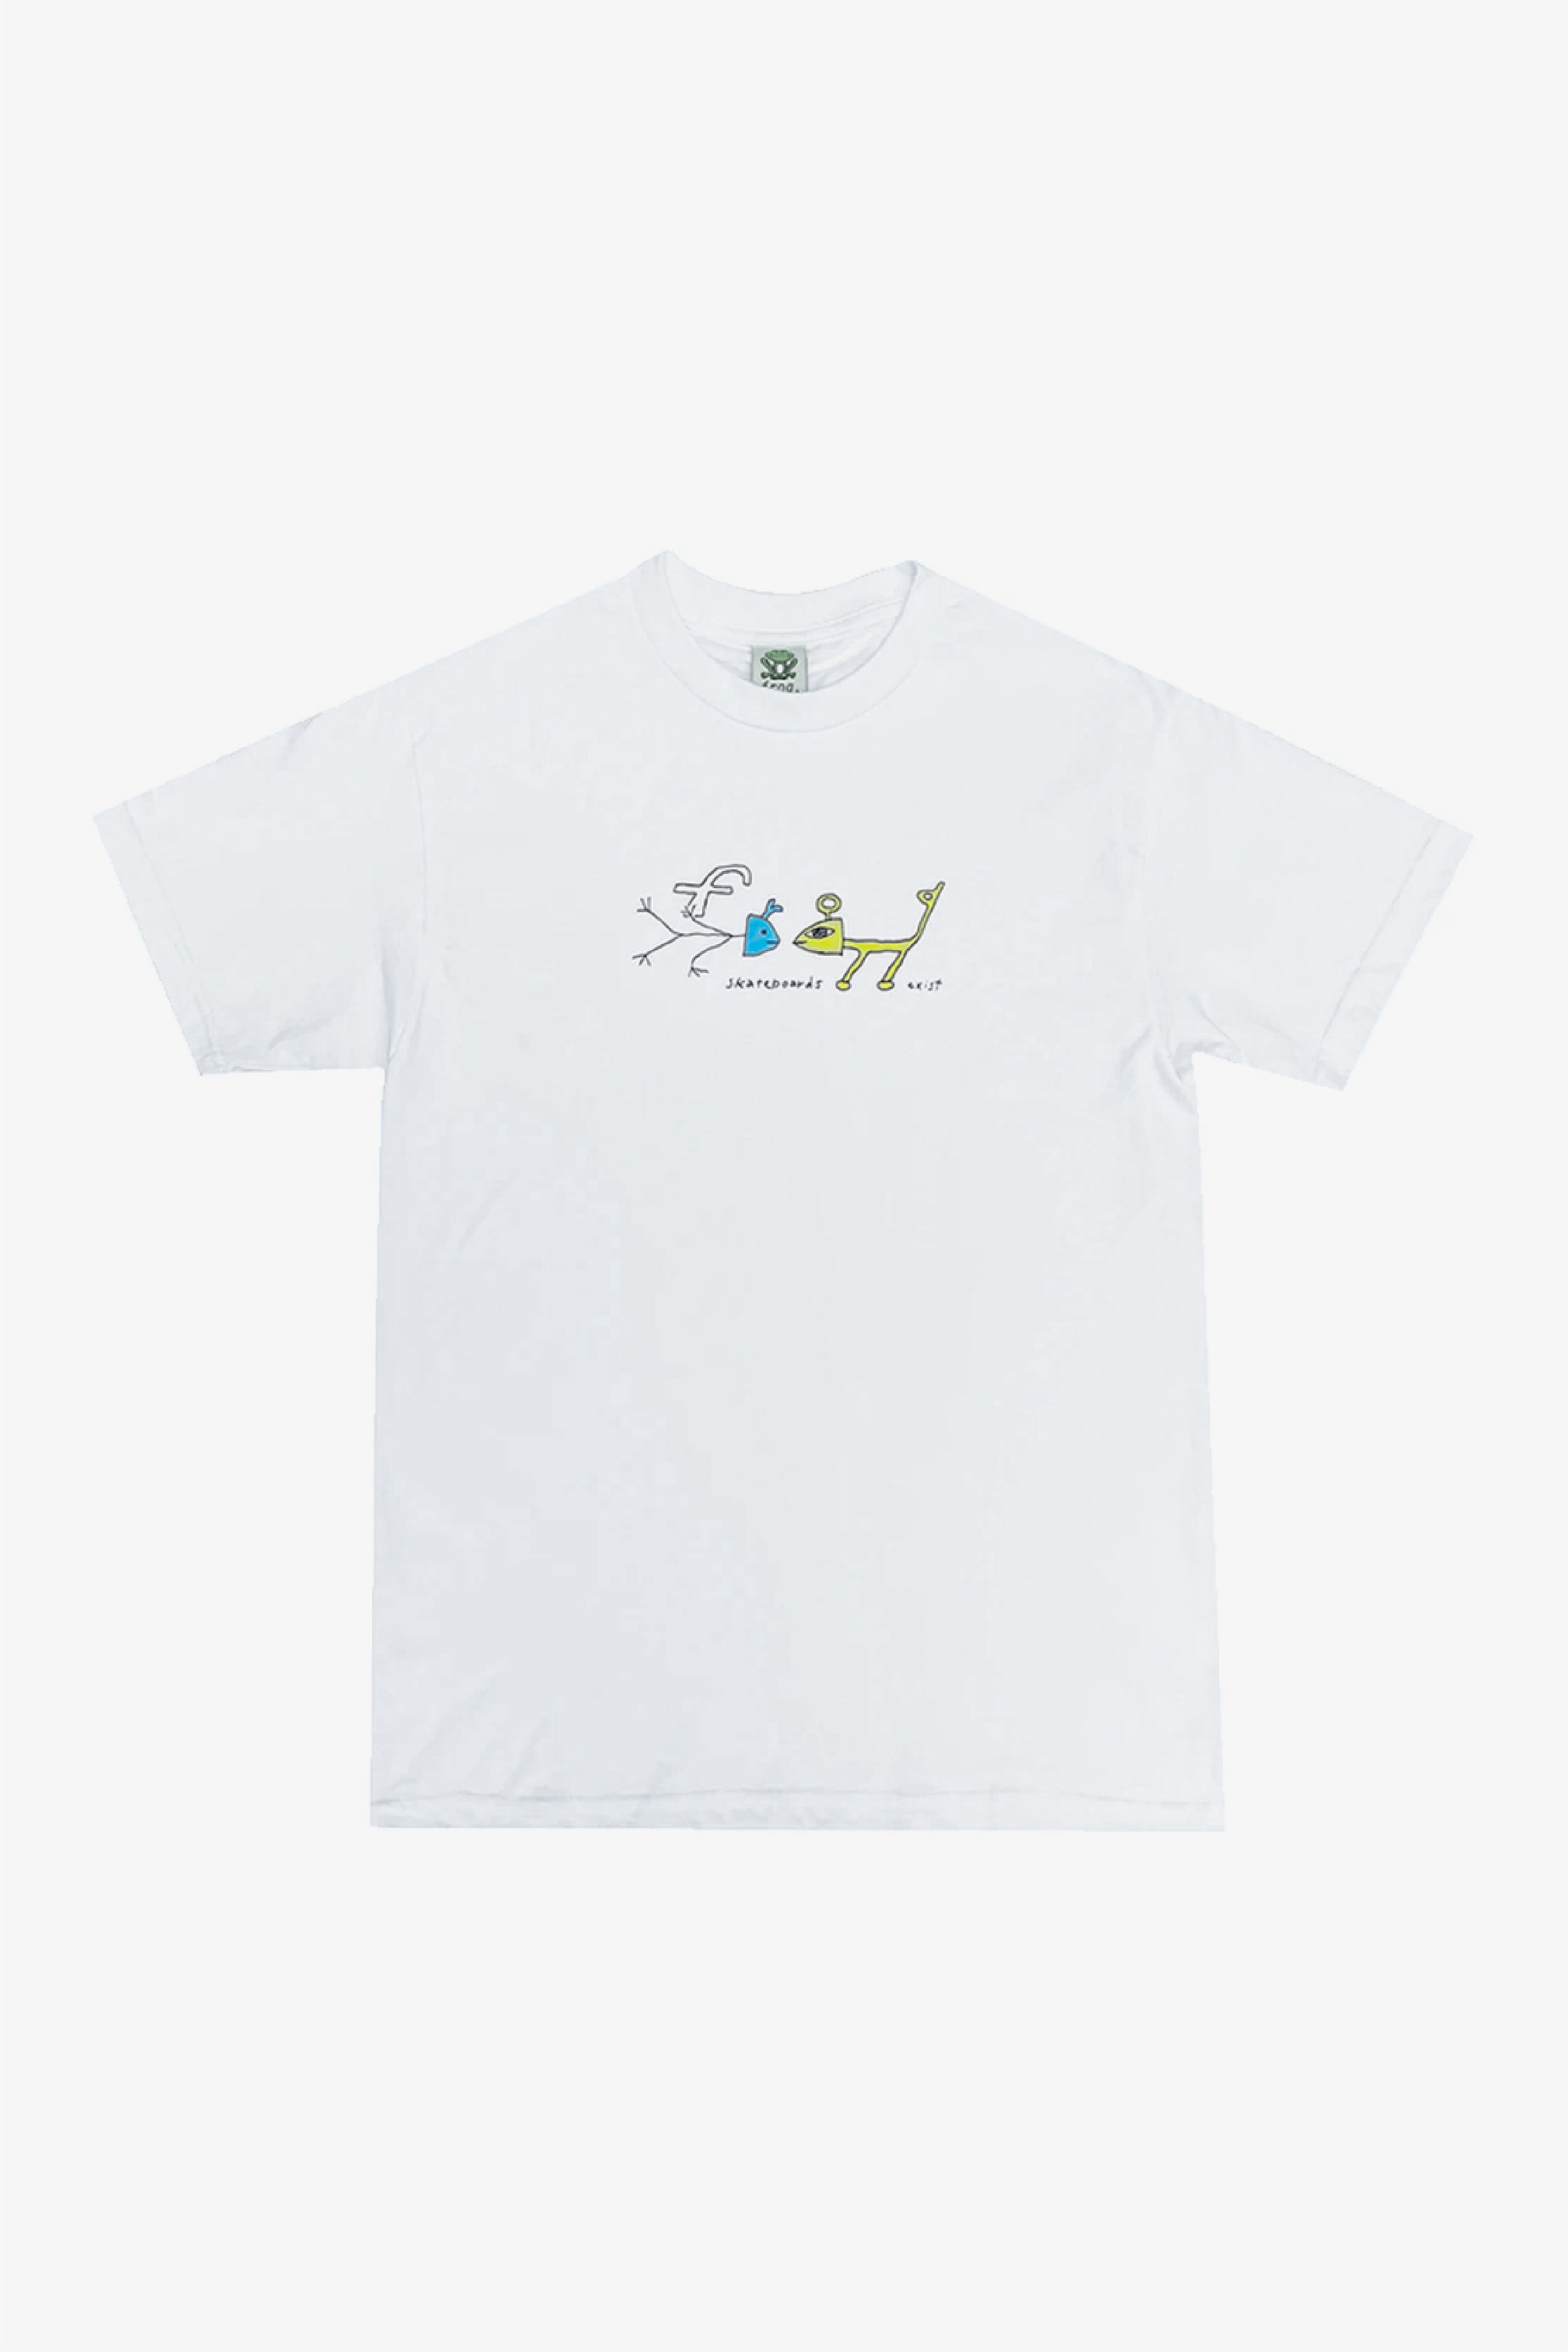 Selectshop FRAME - FROG SKATEBOARDS Frog Exists! Tee T-Shirts Dubai